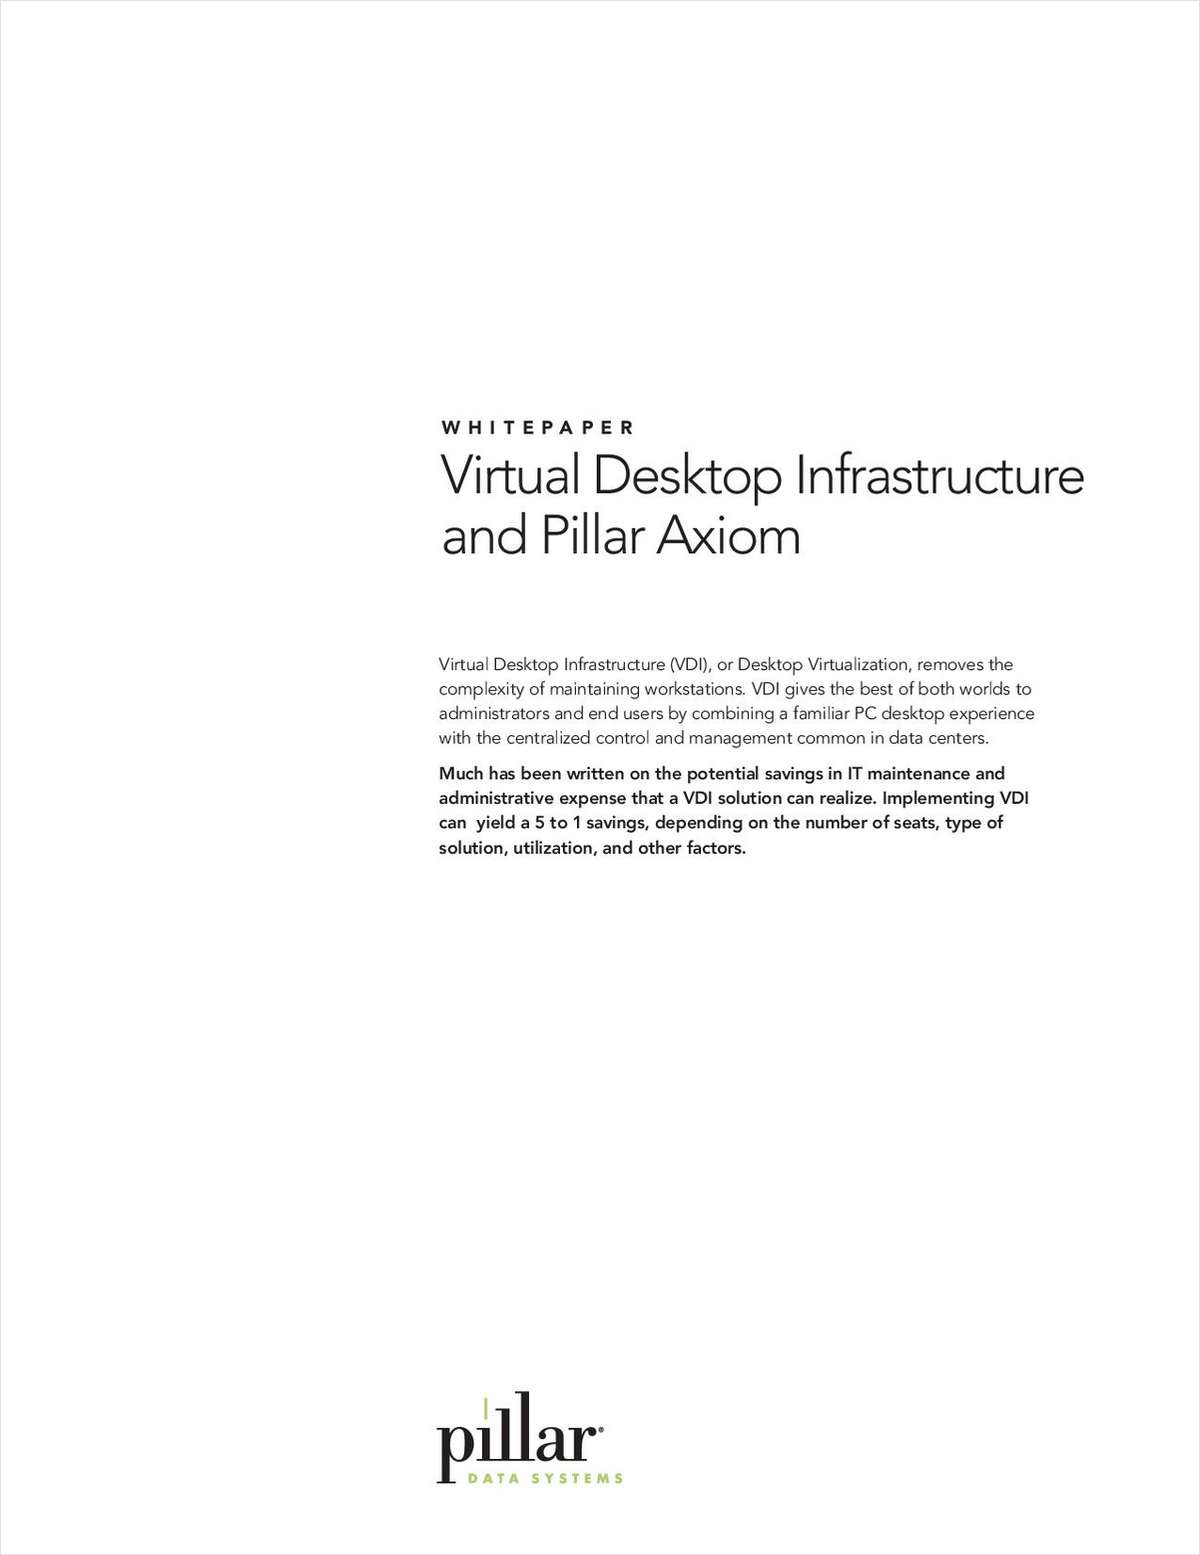 Benefits of a Virtual Desktop Infrastructure